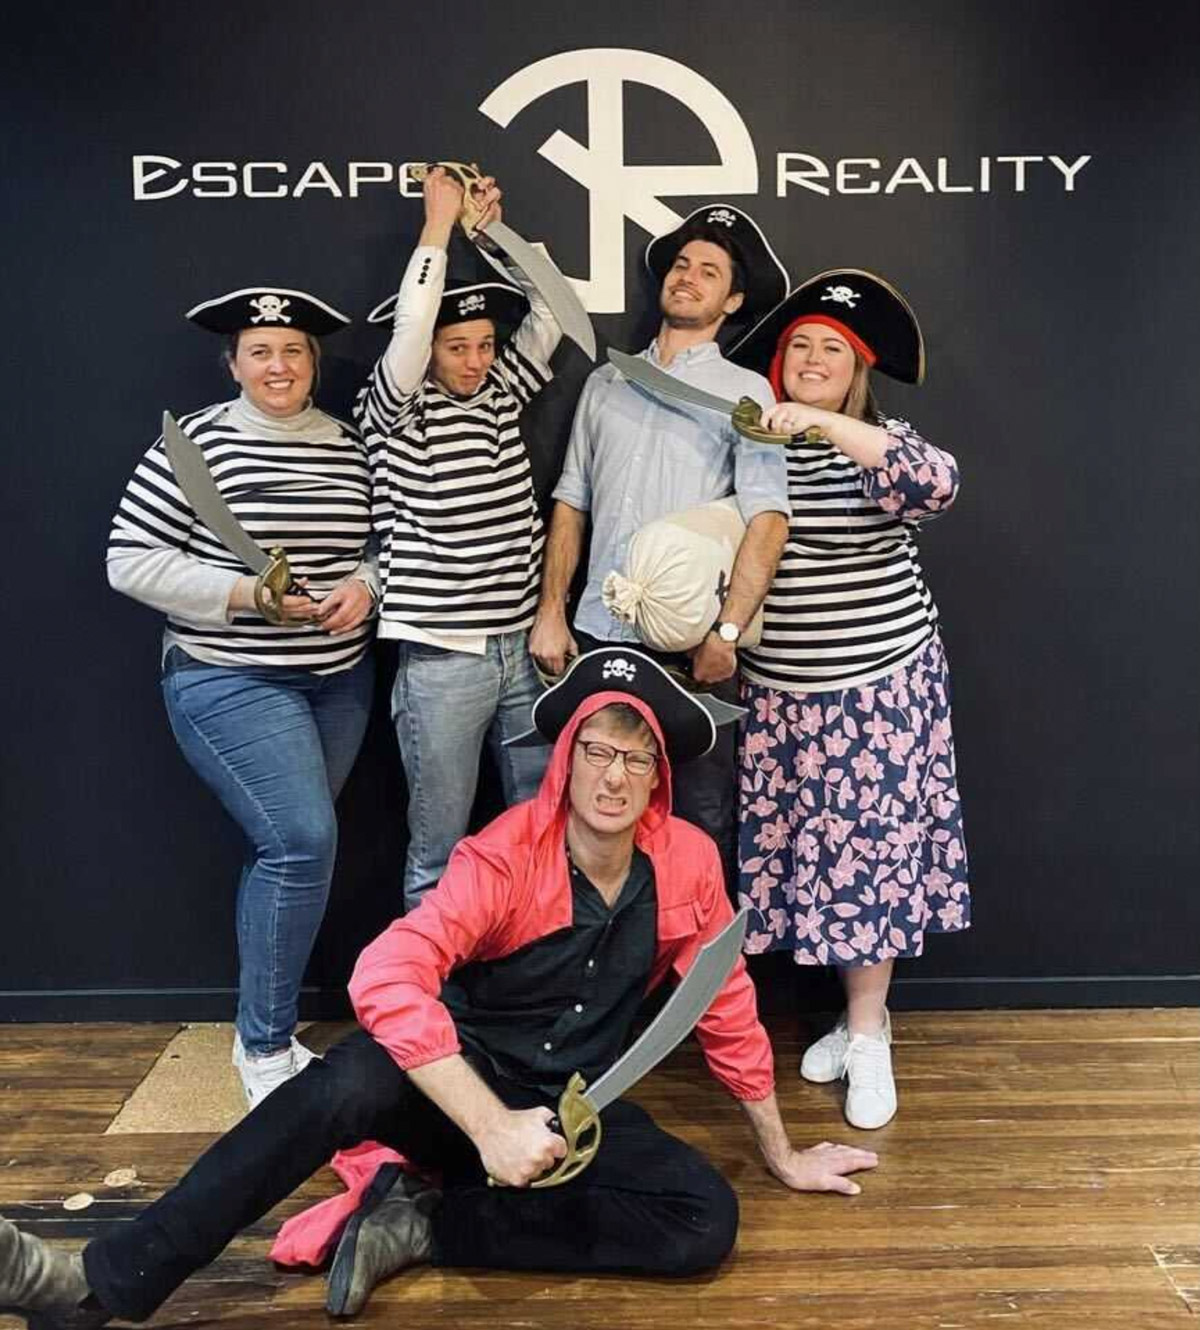 Finance and Admin at Escape Reality escape room